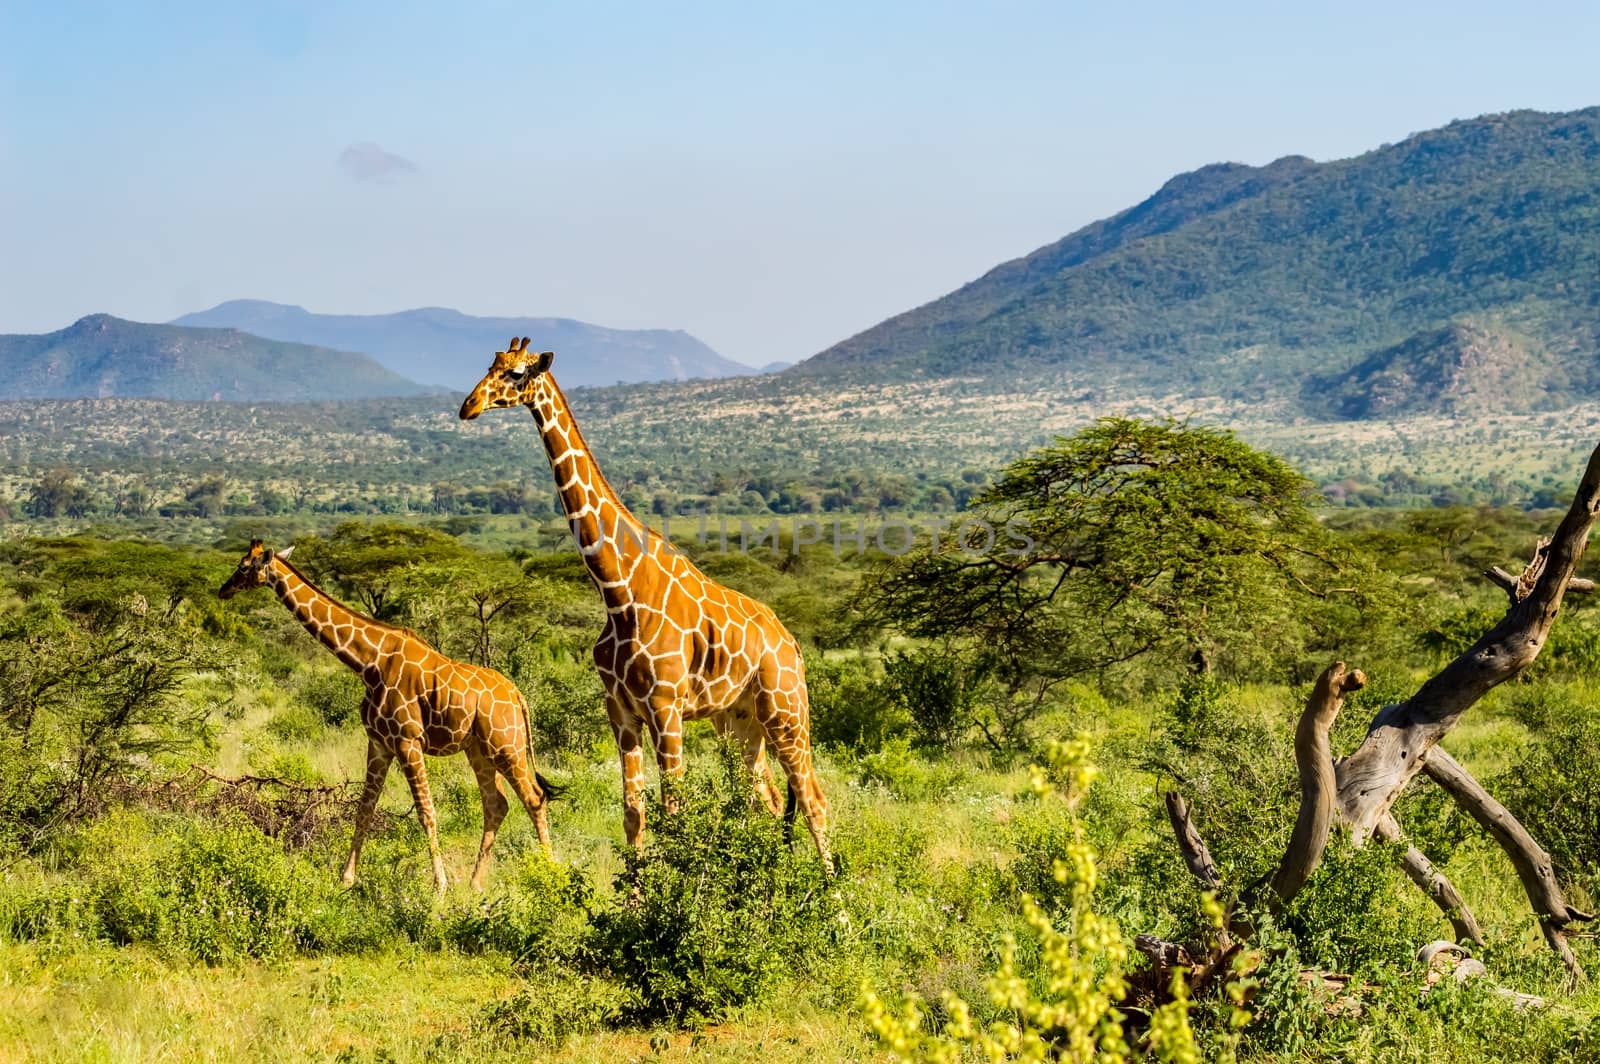 A giraffe and her cub in the savannah of Samburu  by Philou1000